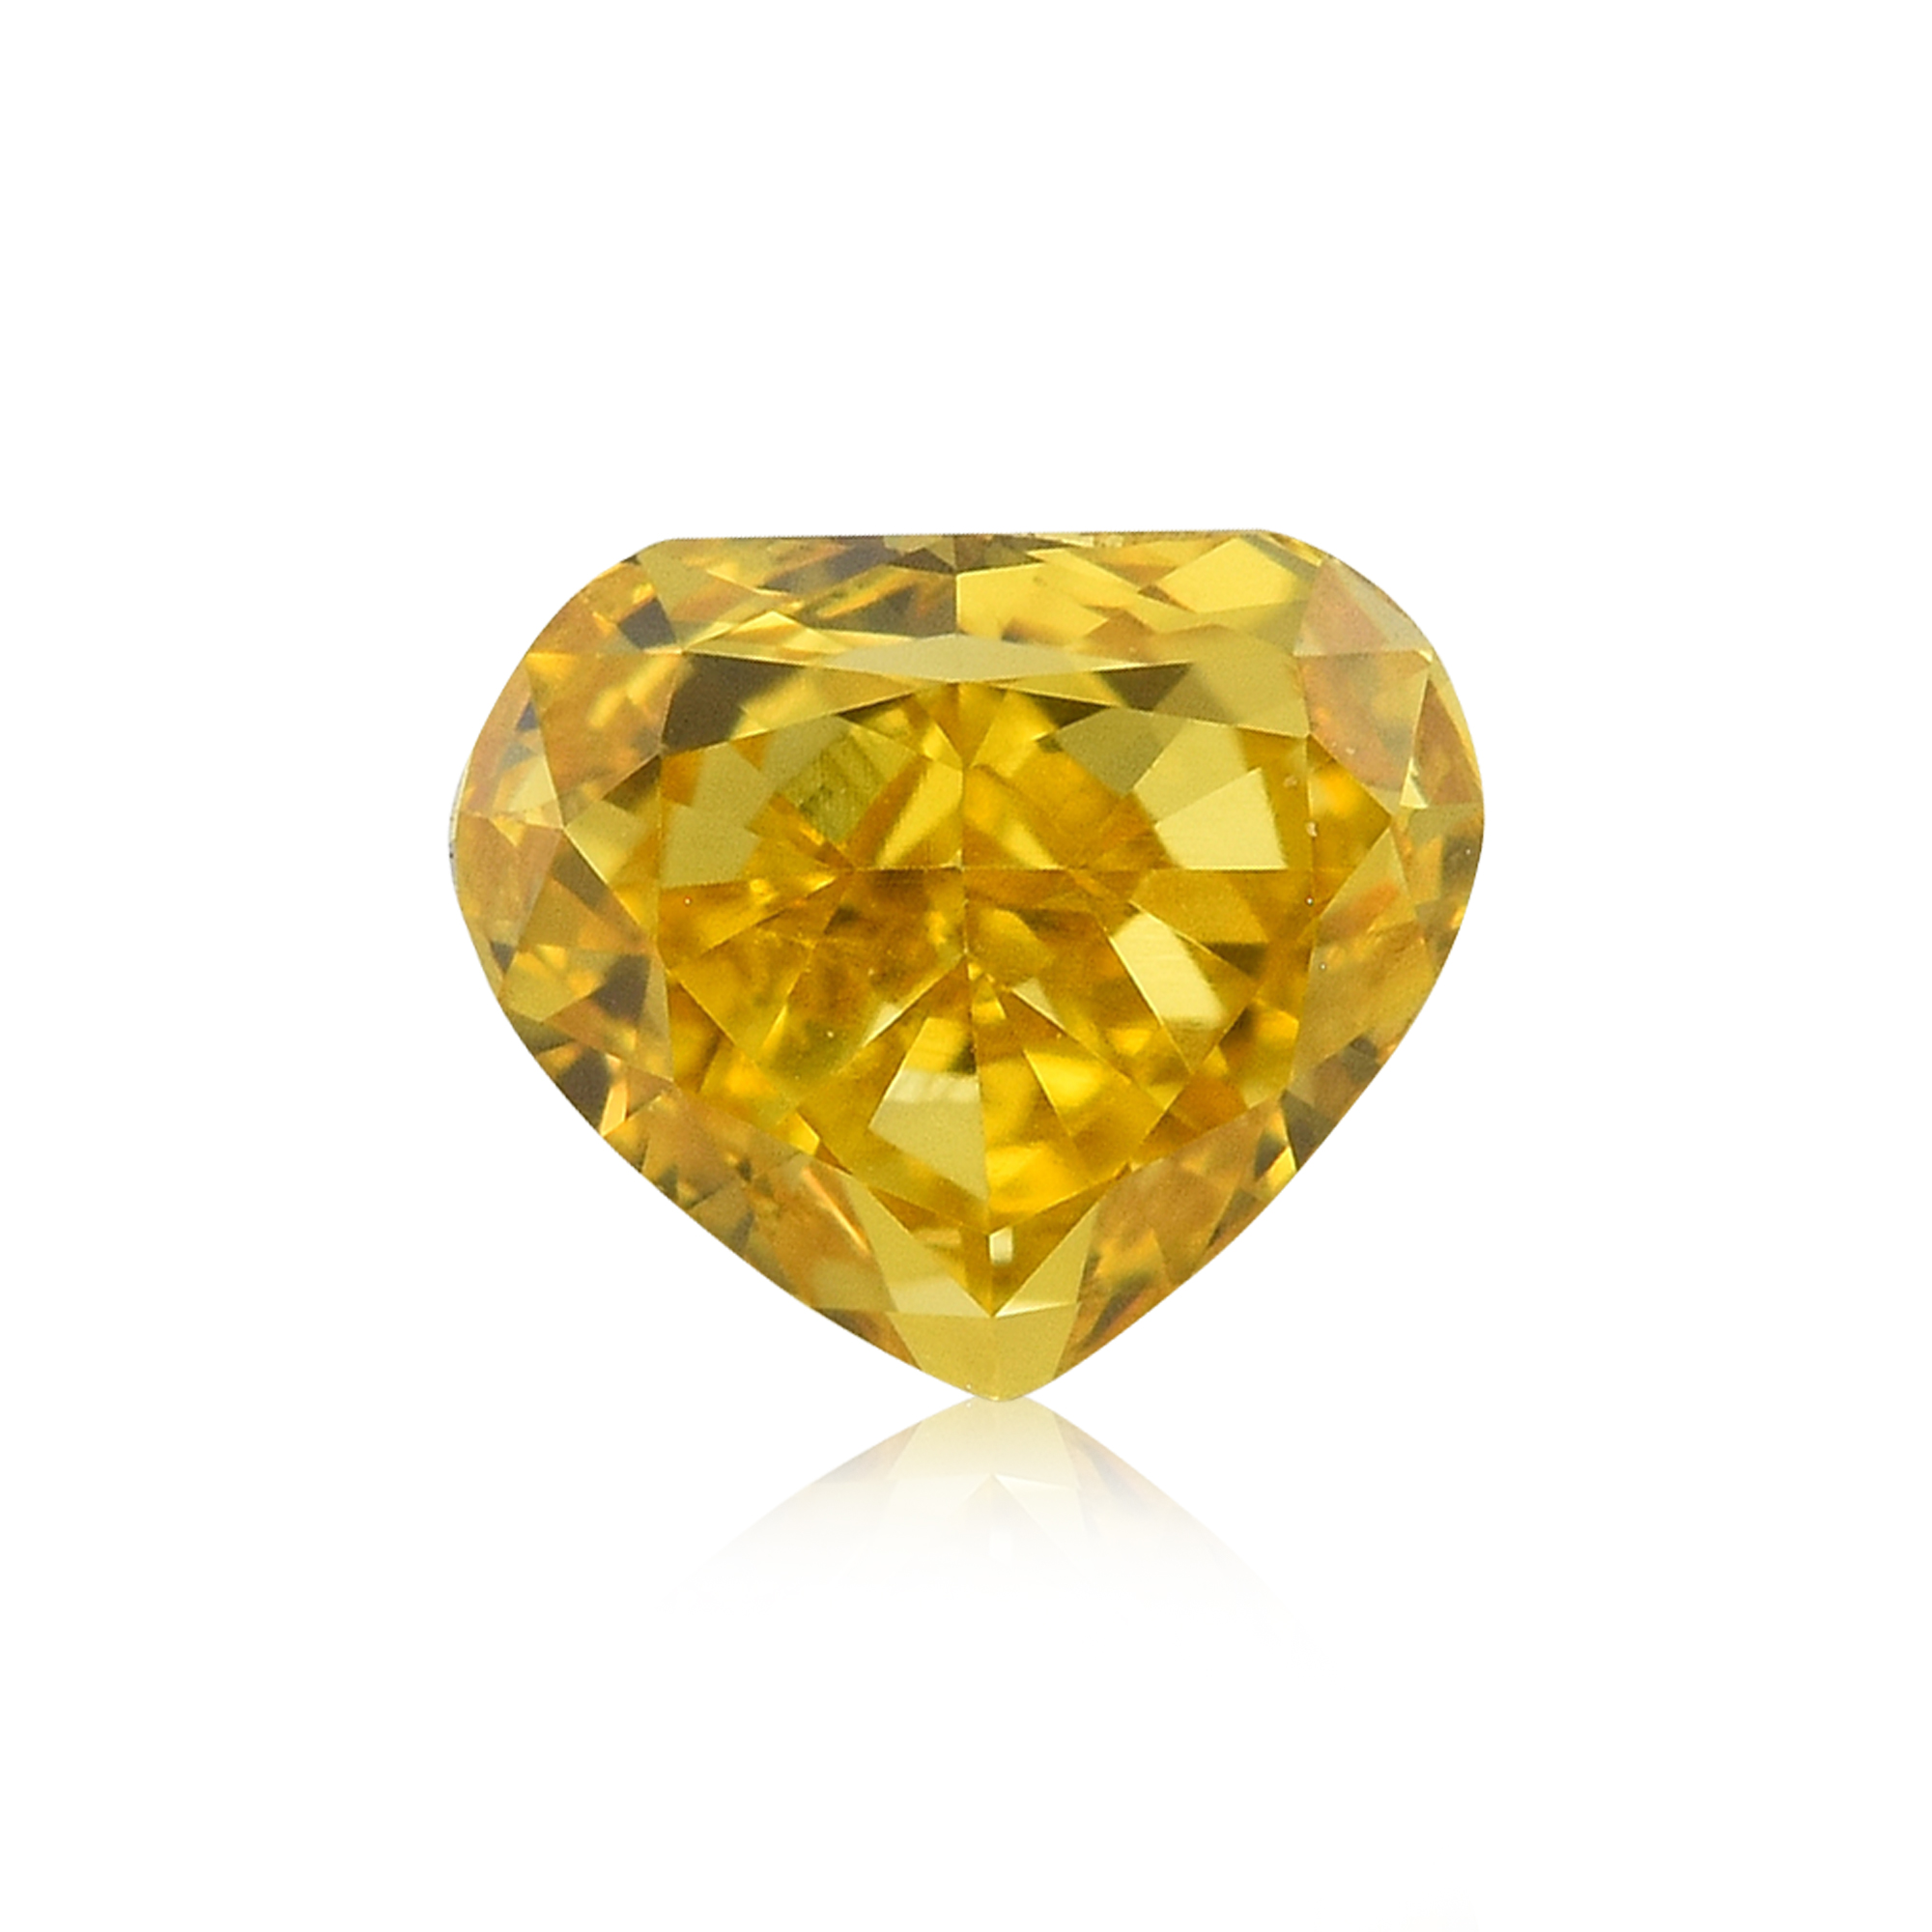 0.34 carat, Fancy Vivid Orangy Yellow Diamond, Heart Shape, SI1 Clarity,  GIA, SKU 570349